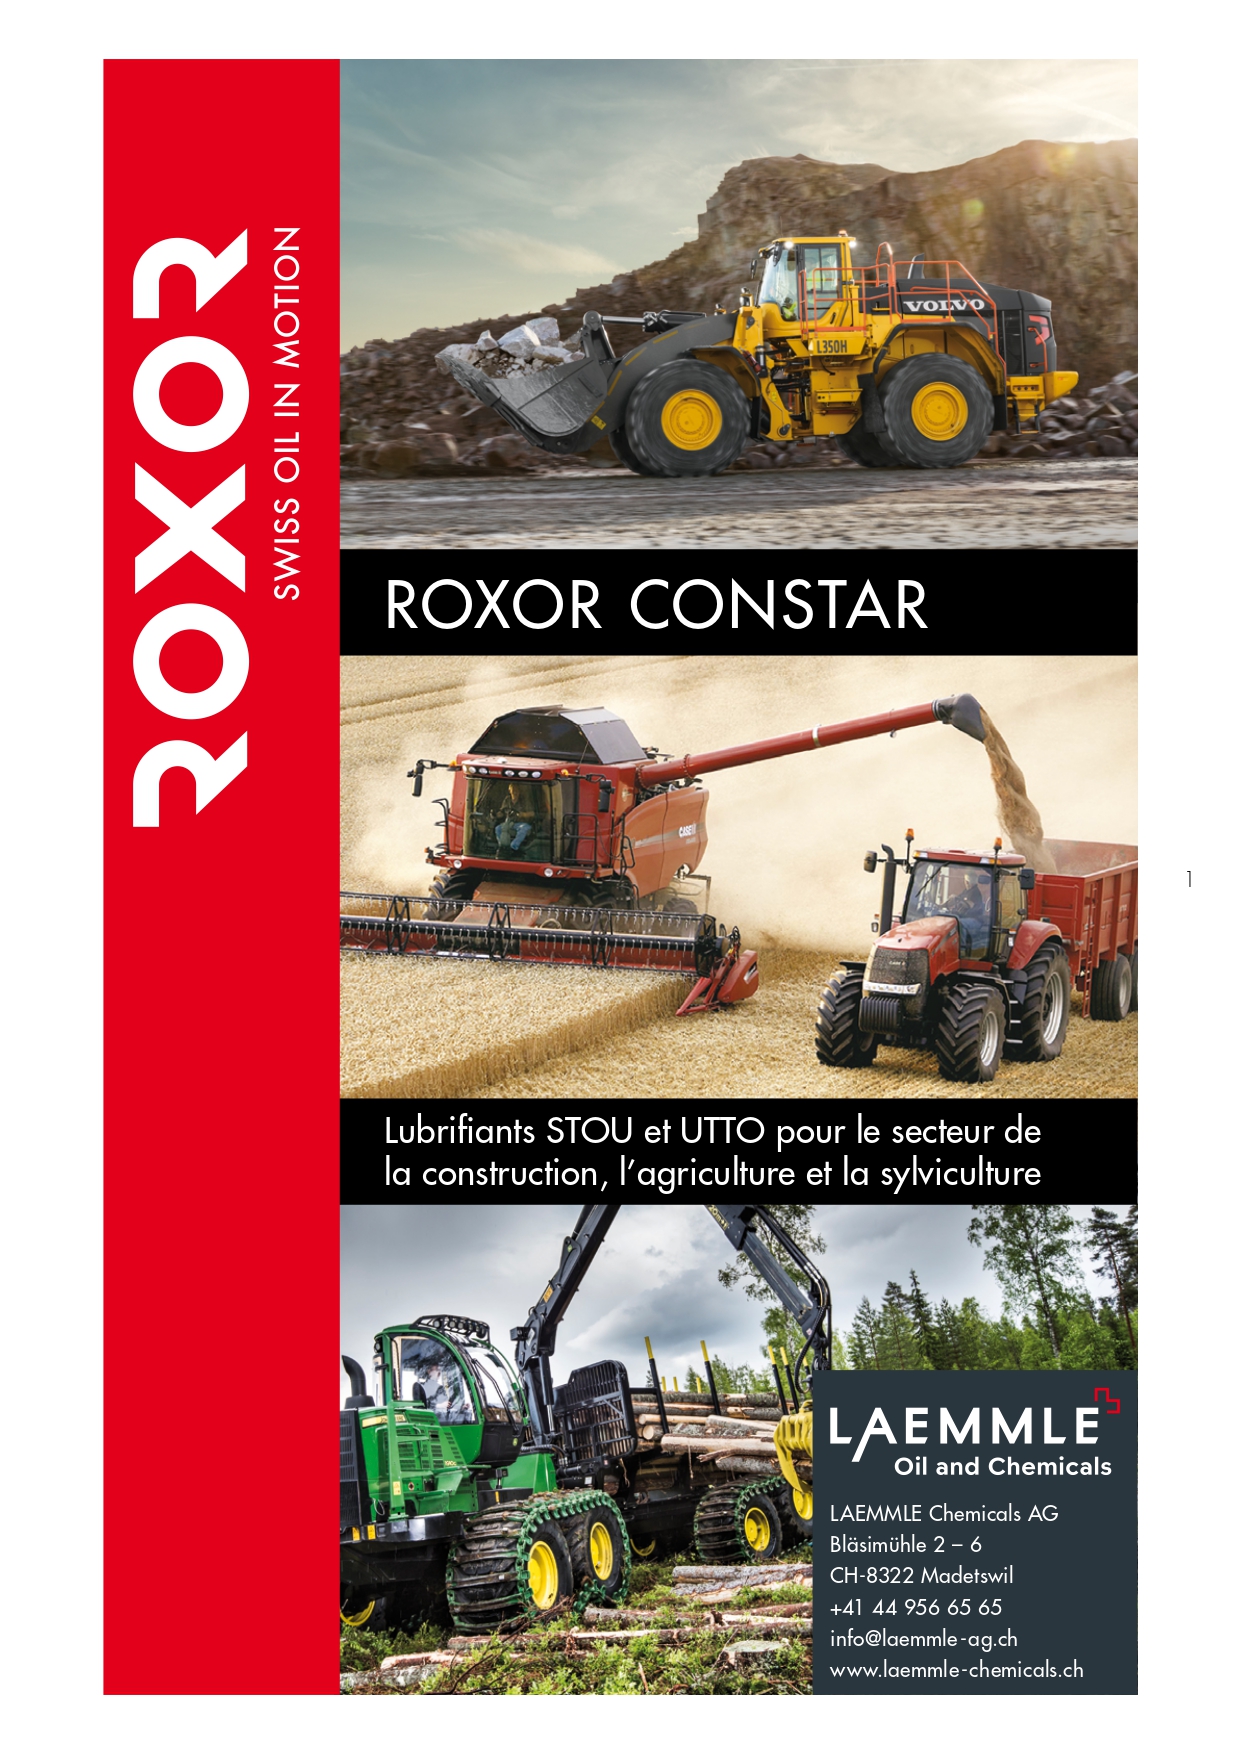 Roxor Constar